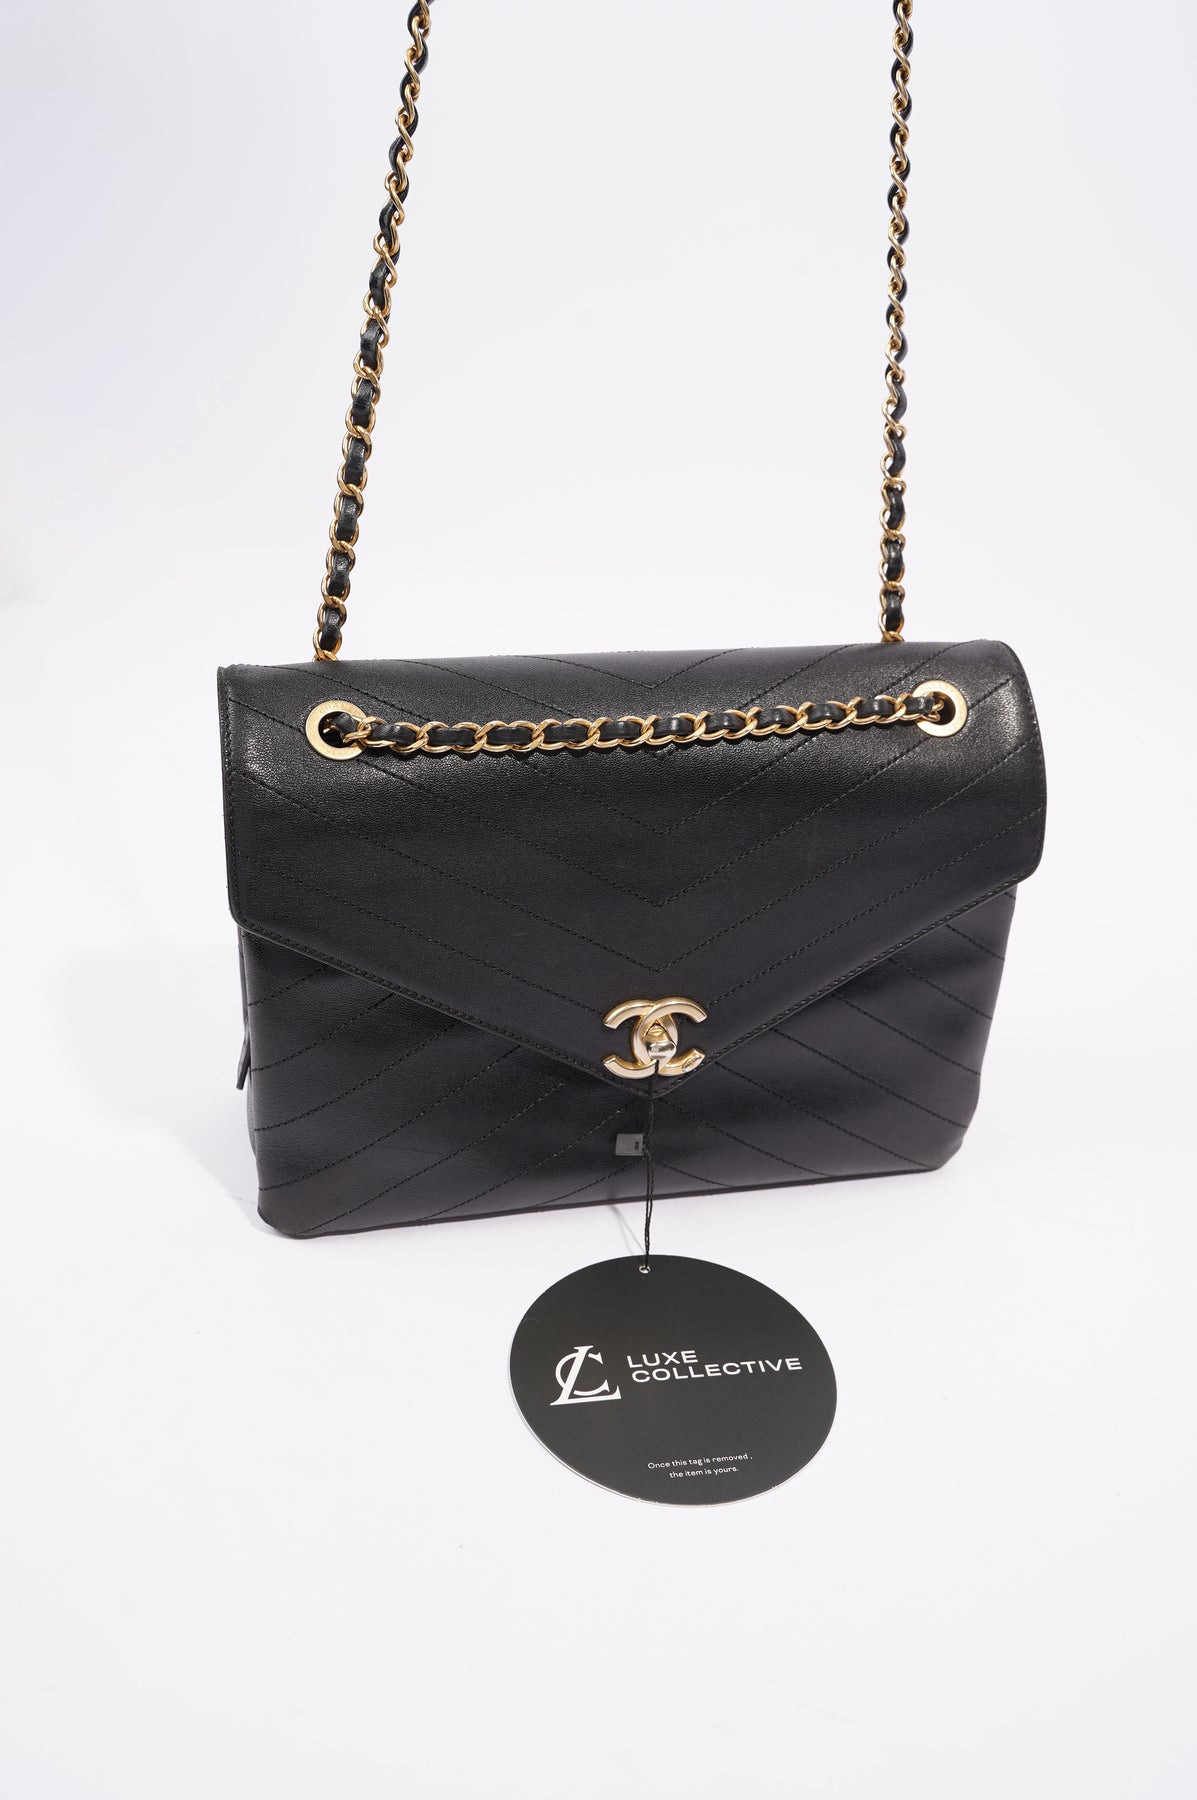 Chanel Stitched Lambskin Coco Luxe Medium Flap Bag Black - Luxury Helsinki